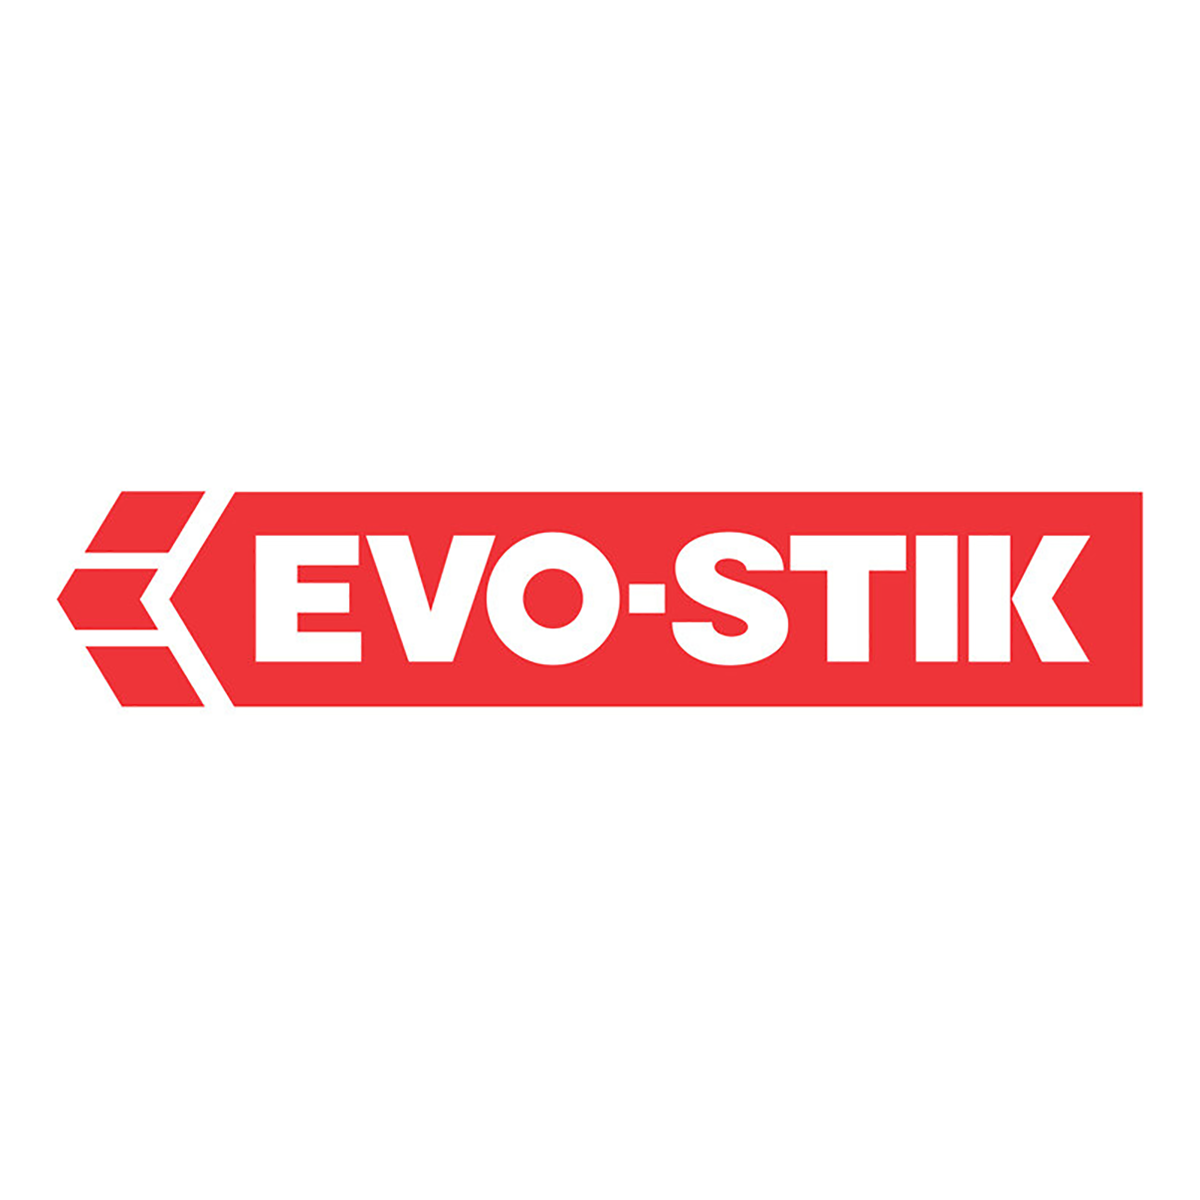 Bostik Evo-stick glue dry suit, 0.33ltr